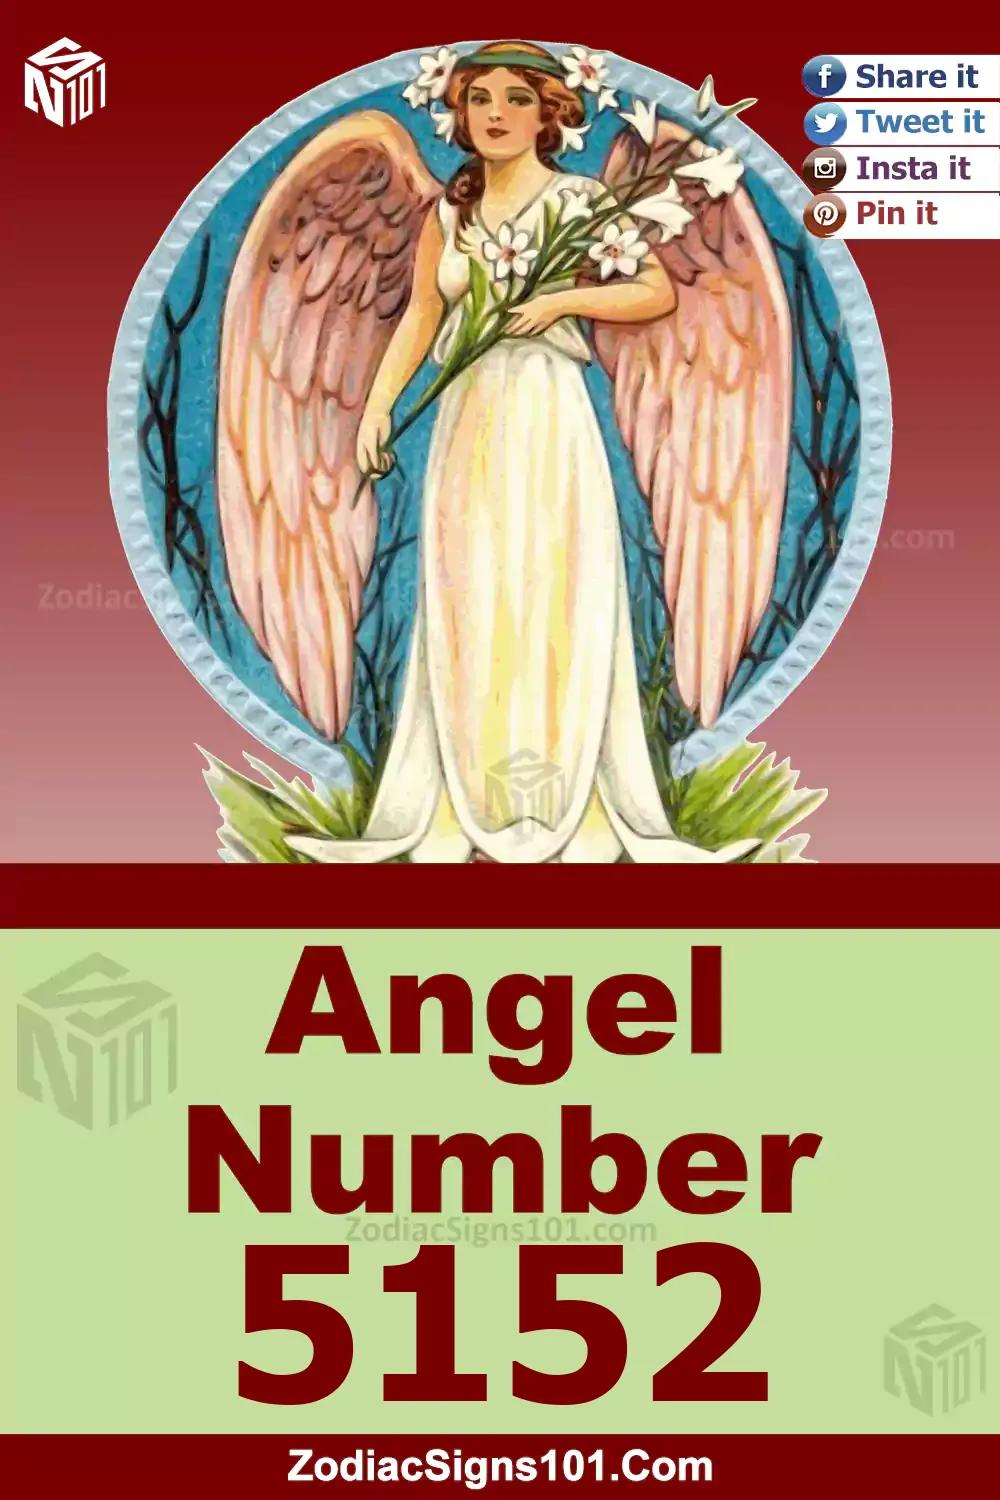 5152-Angel-Number-Meaning.jpg